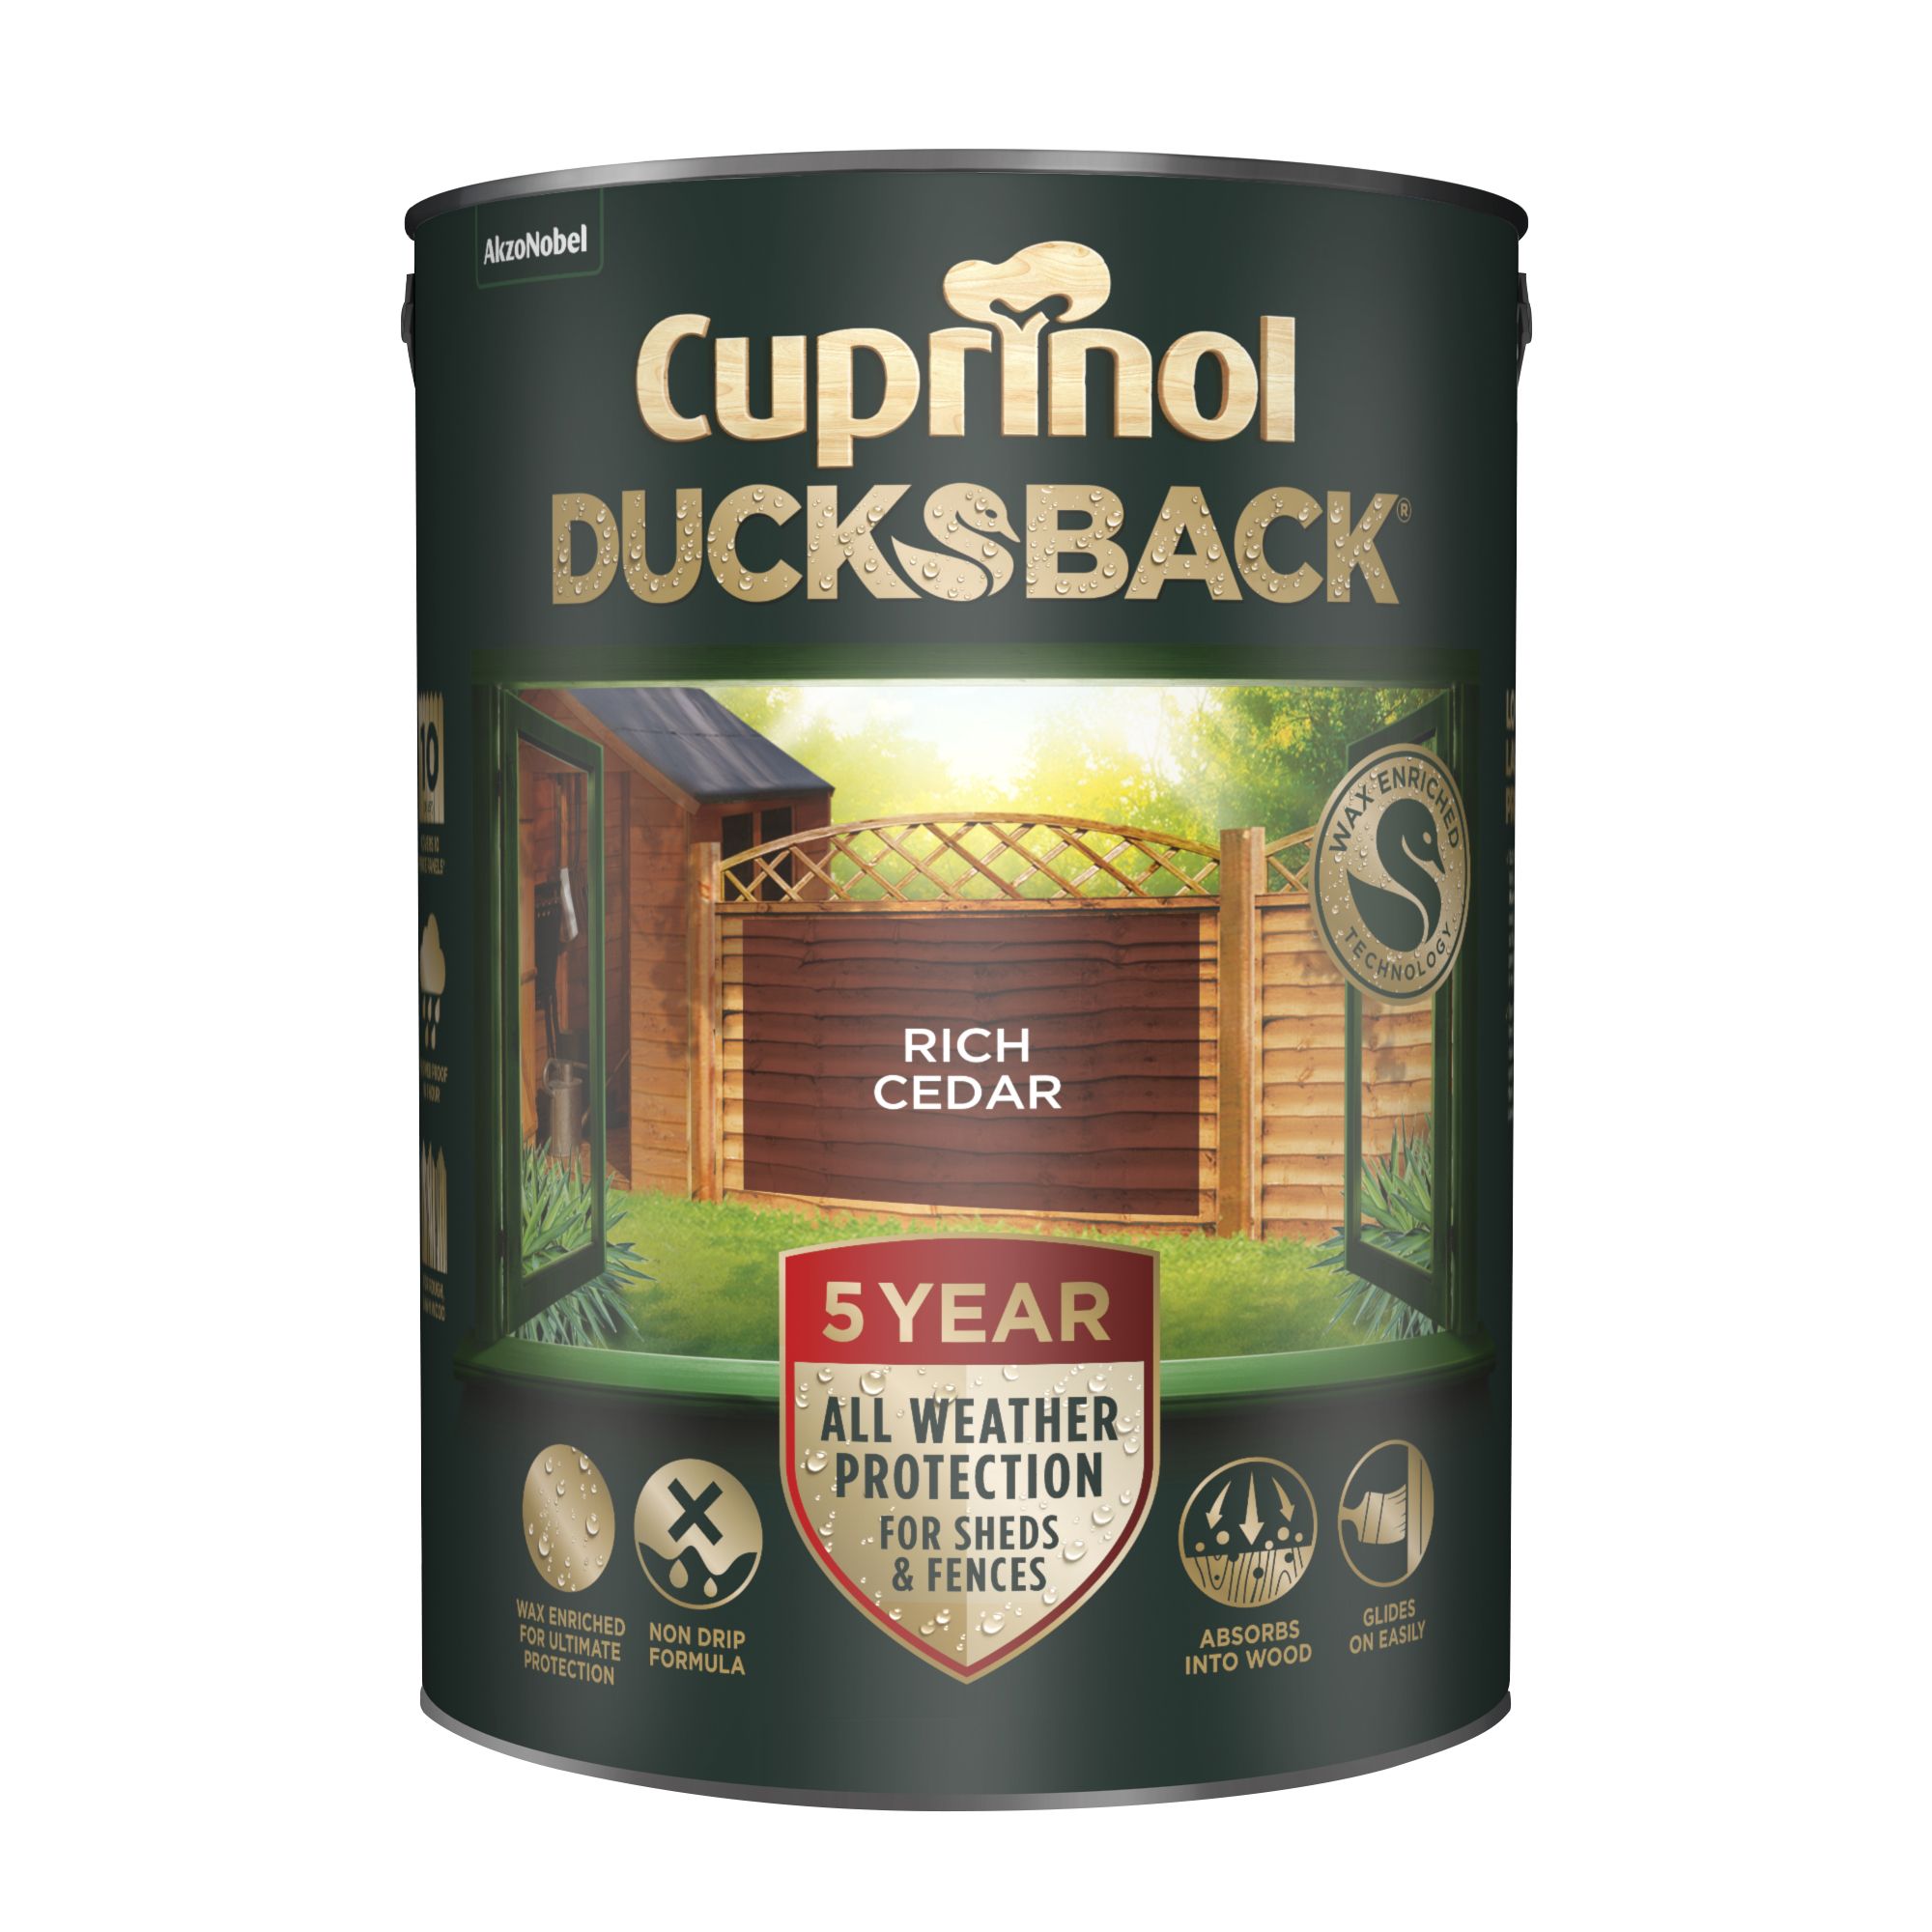 Cuprinol 5 year ducksback Rich cedar Exterior Wood paint, 5L